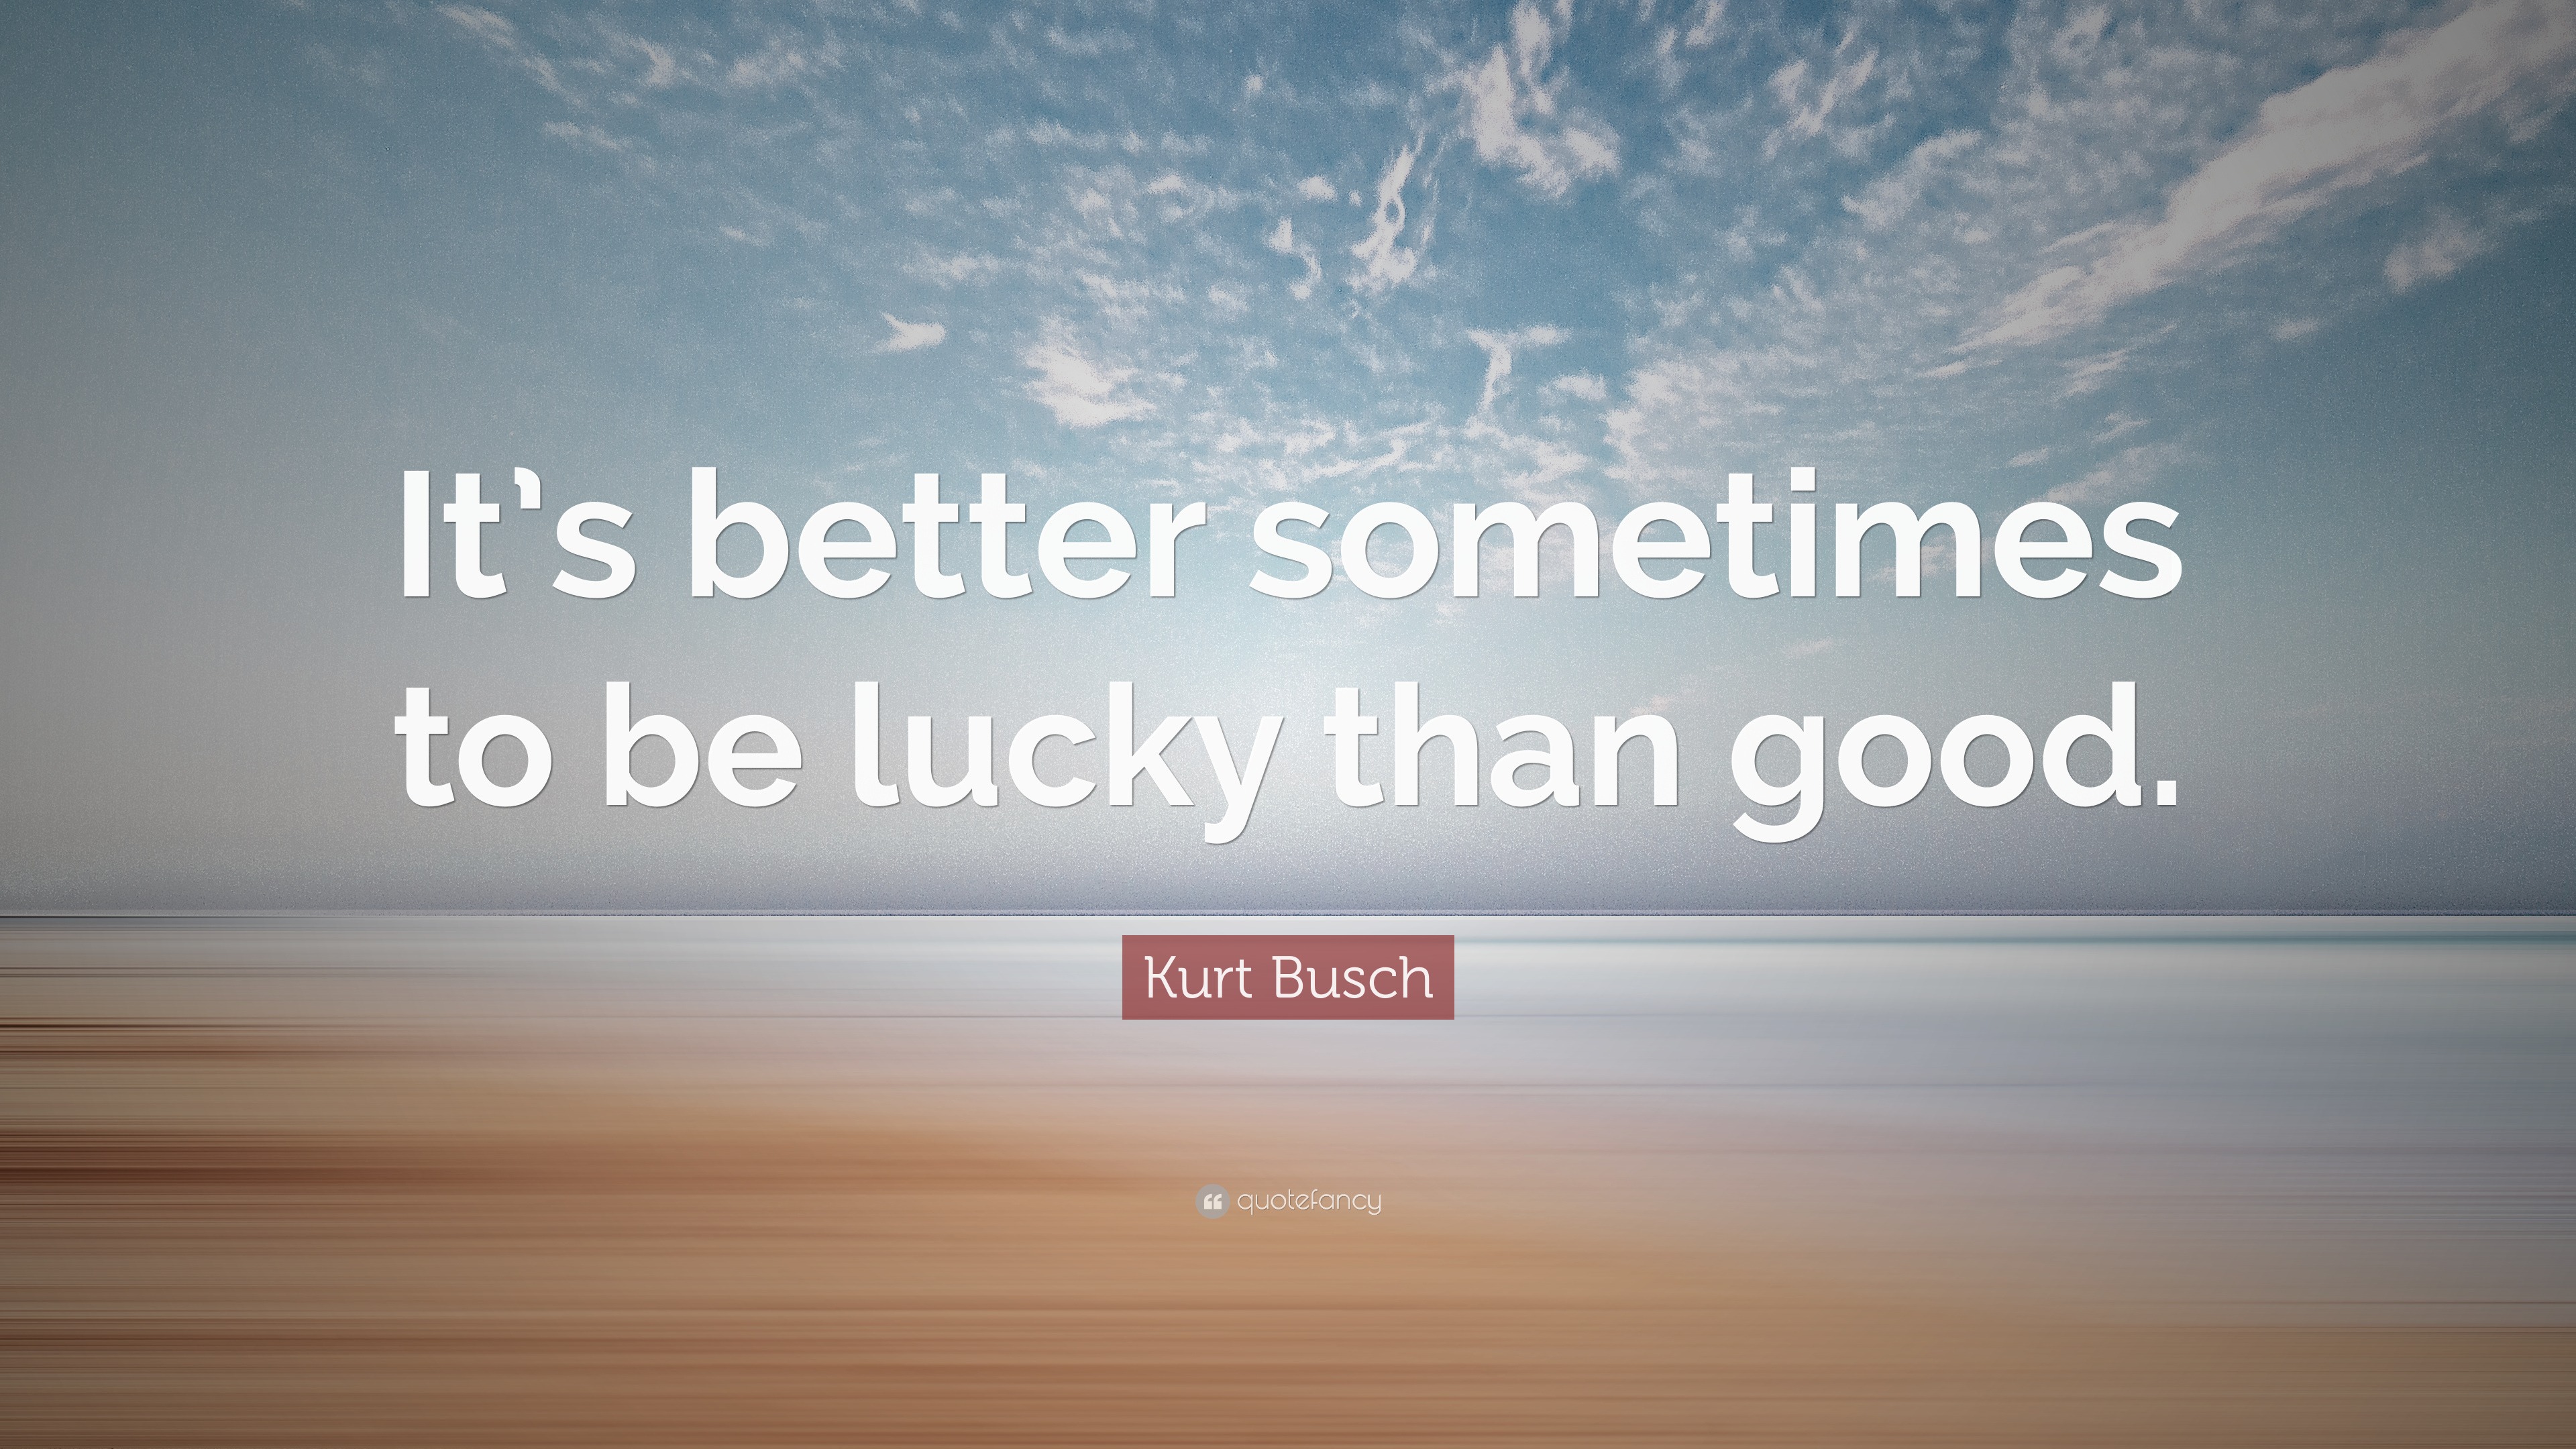 Kurt Busch Quote: “It's better sometimes to be lucky than good.”